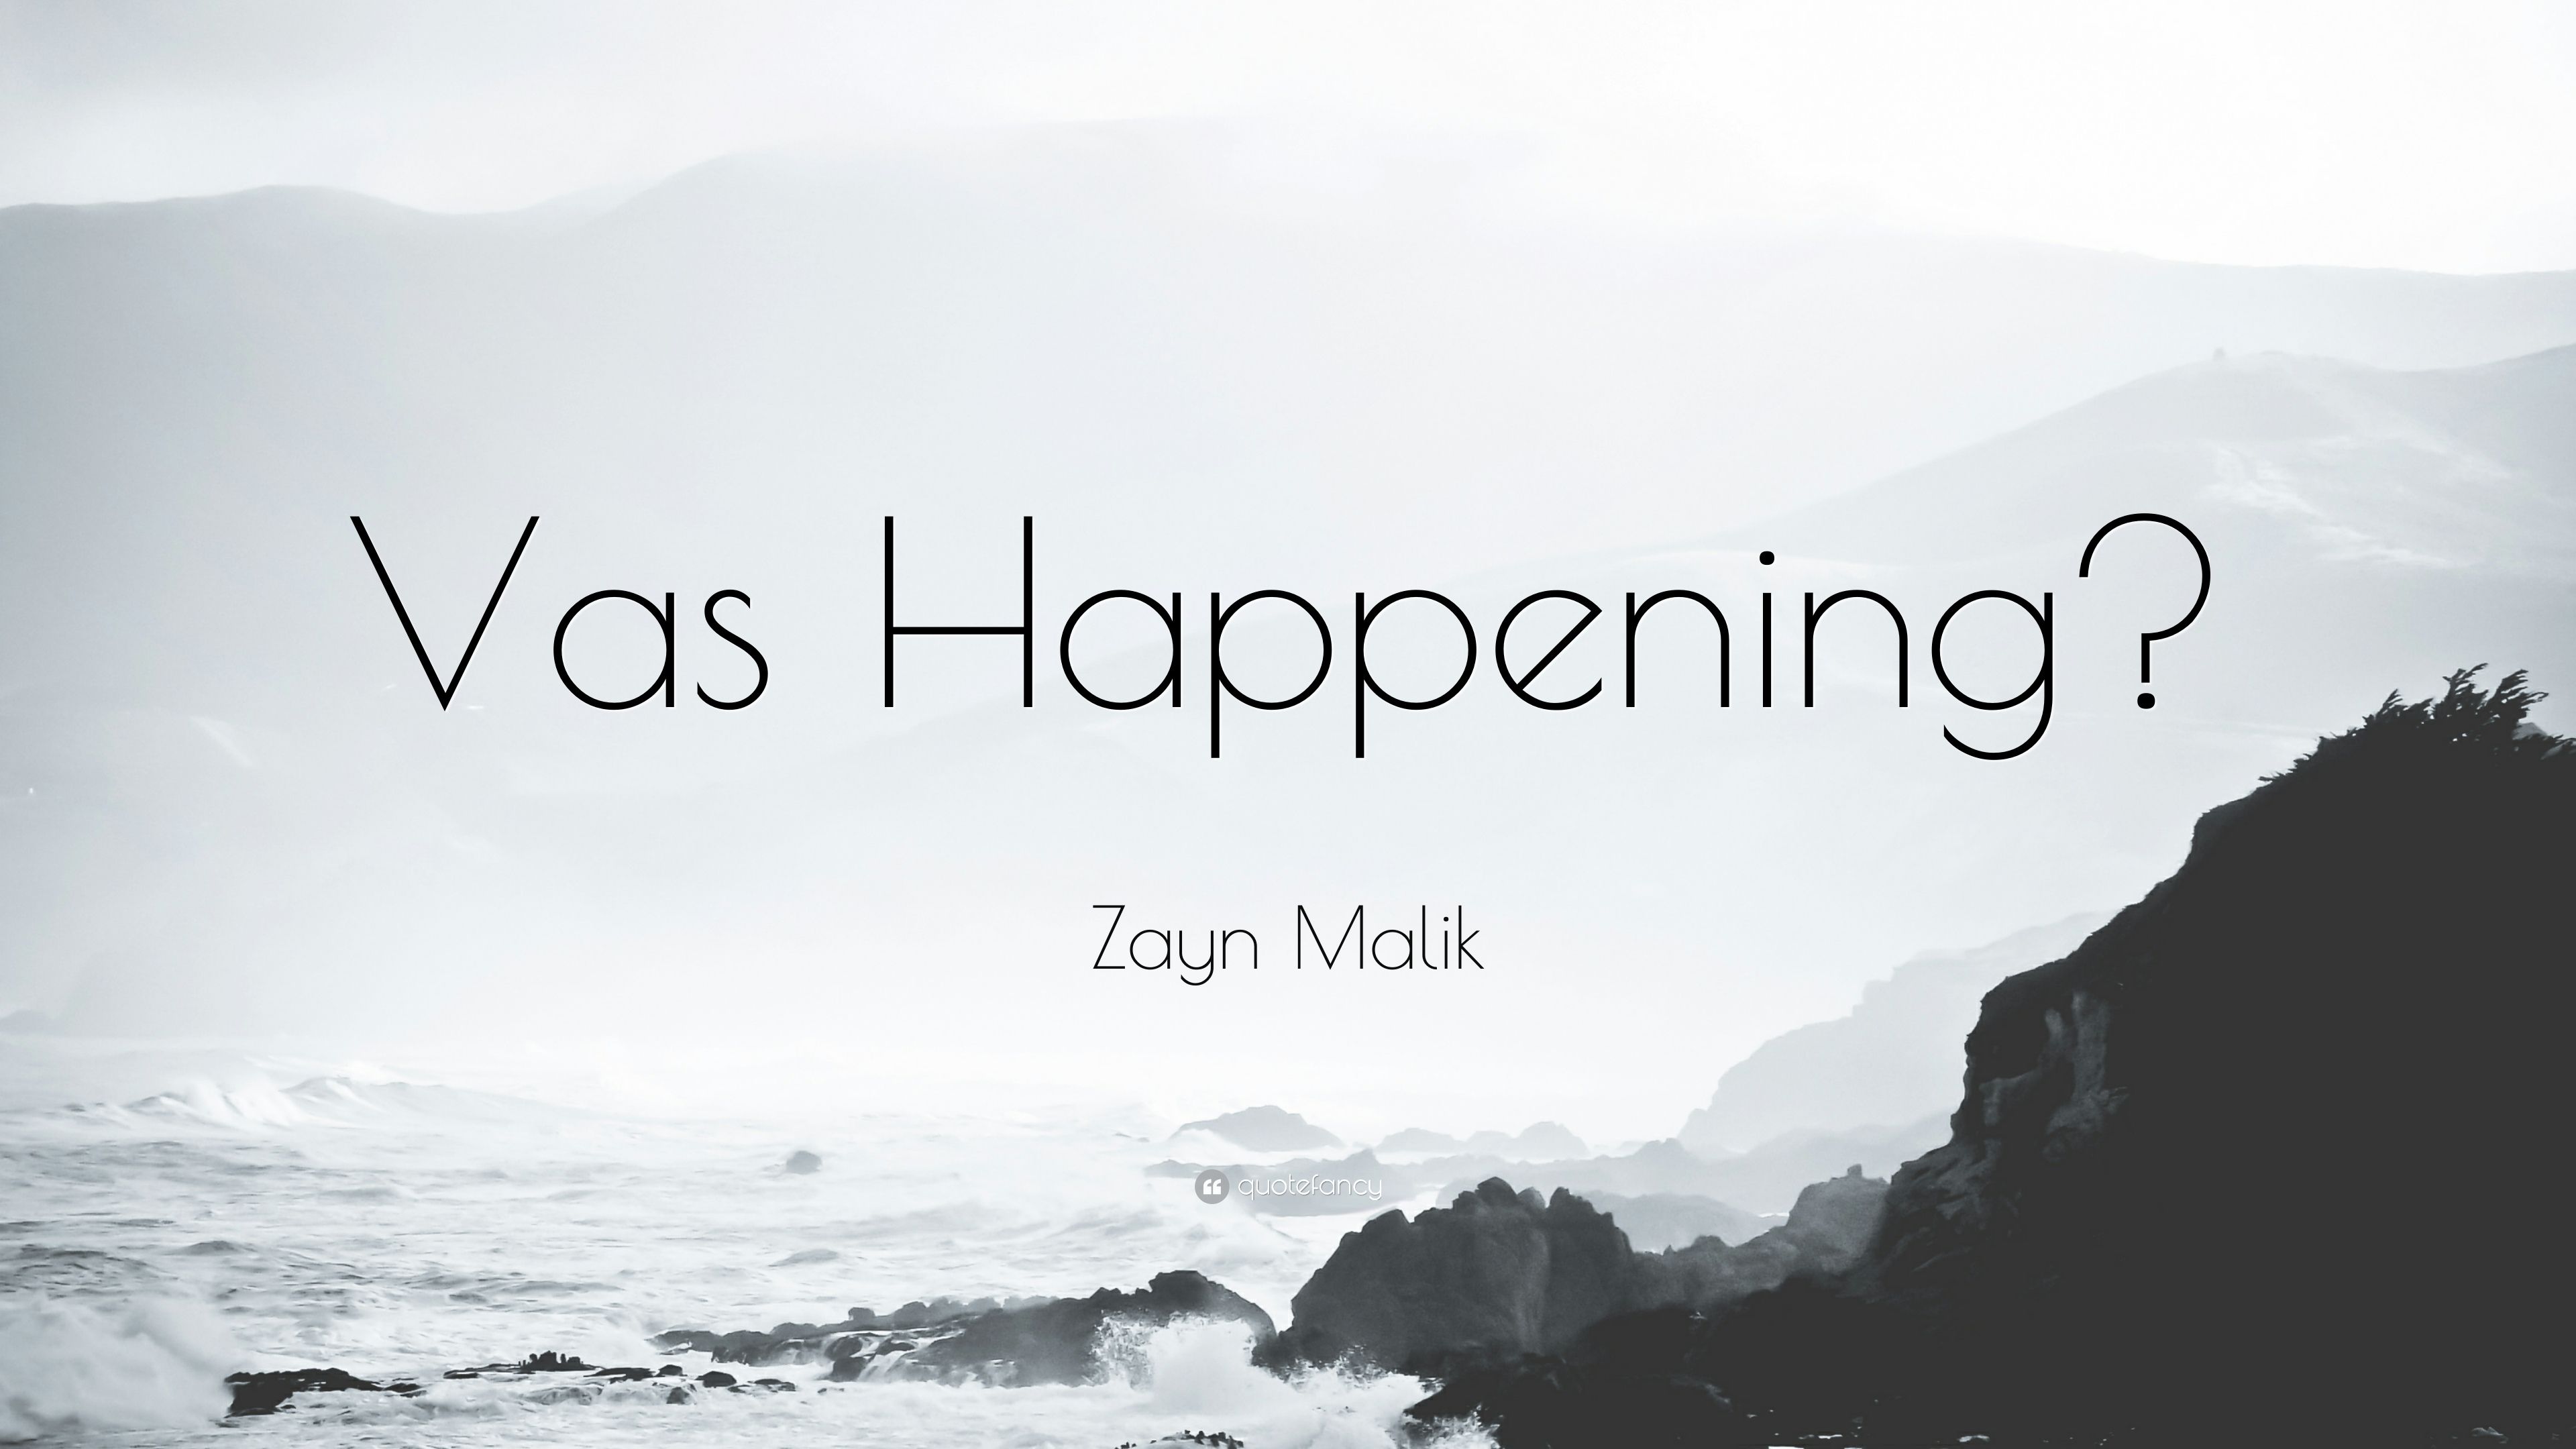 Zayn Malik Quote: “Vas Happening?” (10 wallpaper)